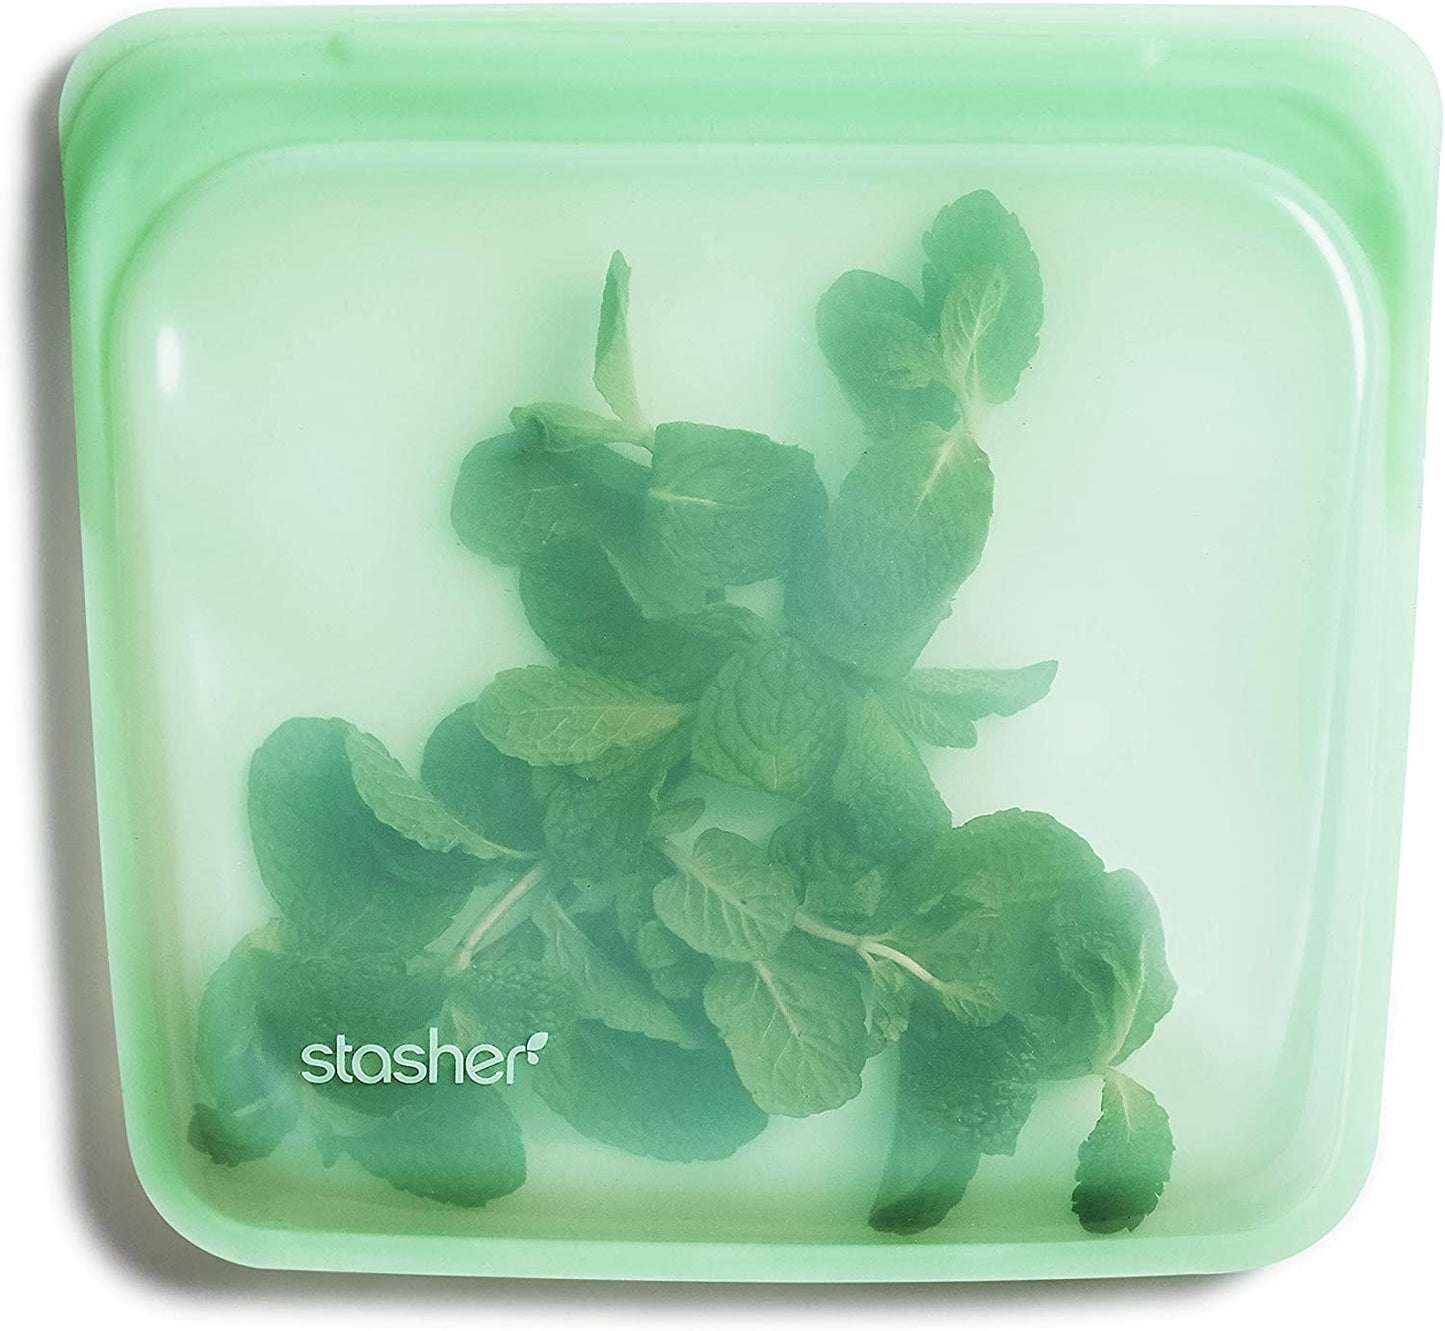 Stasher 可重複使用的矽膠食物袋, 三明治尺寸/ 中號, 450ML